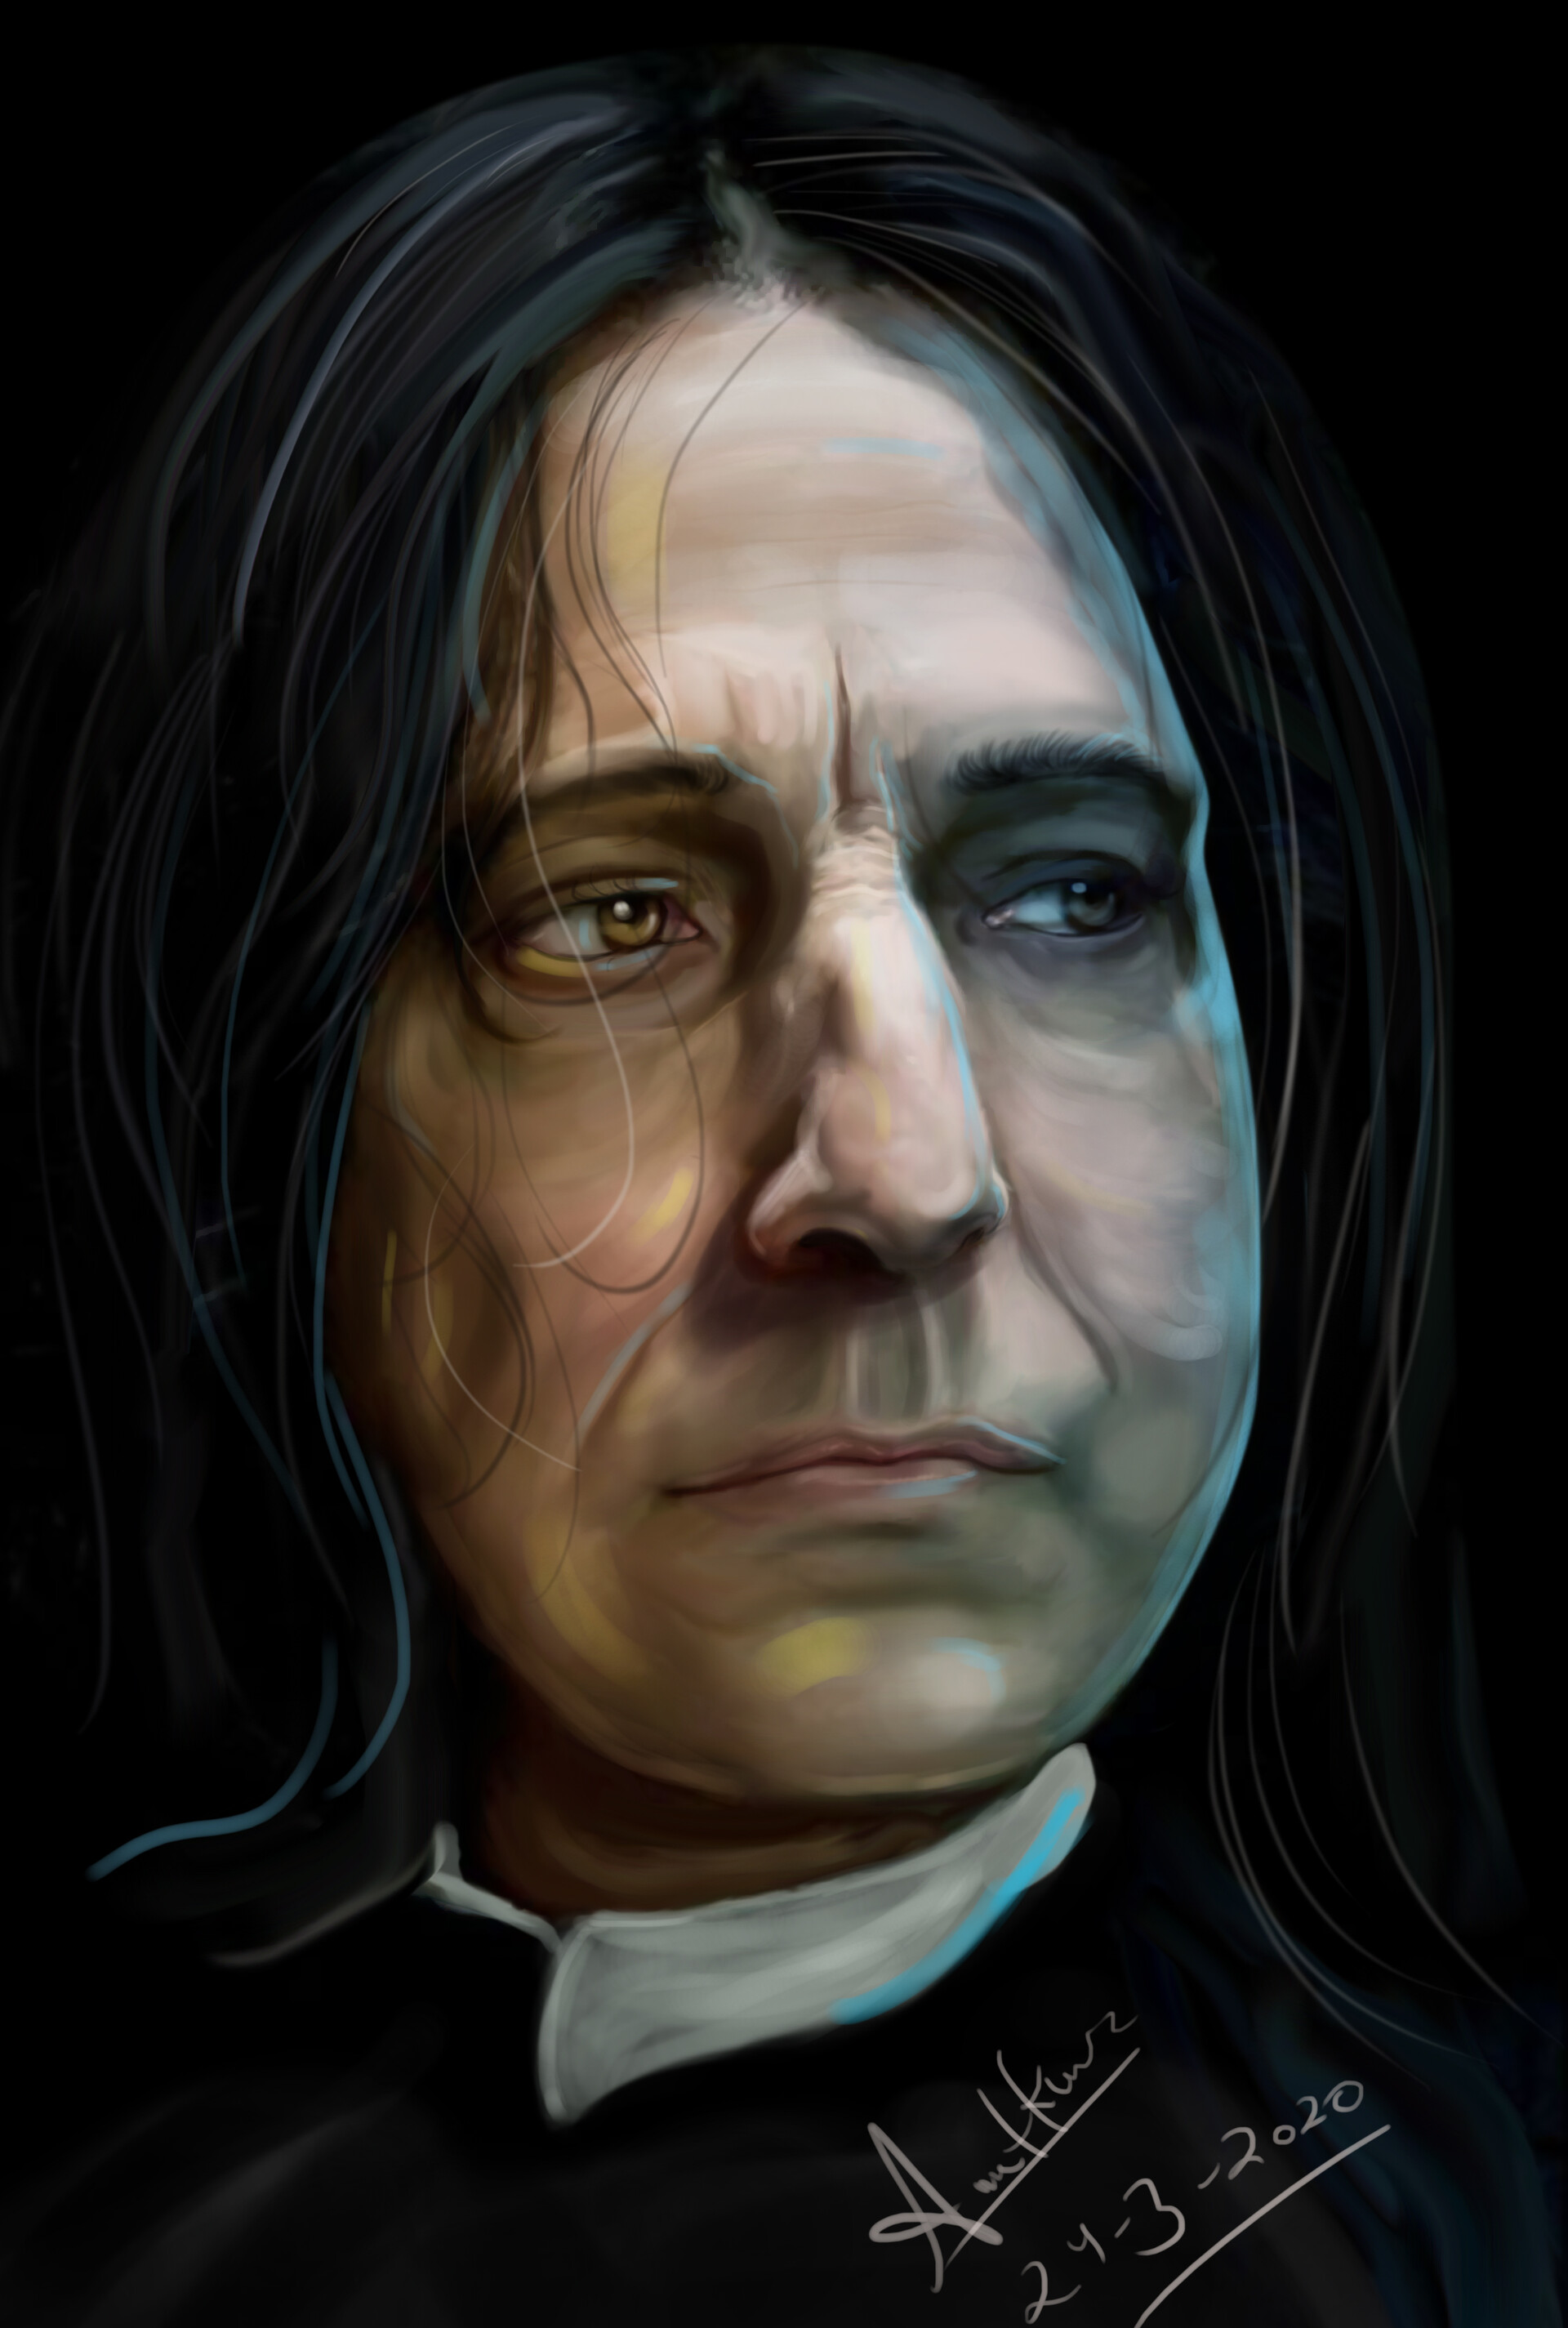 ArtStation - Digital patch work painting of #proffesor_snape Harry Potter